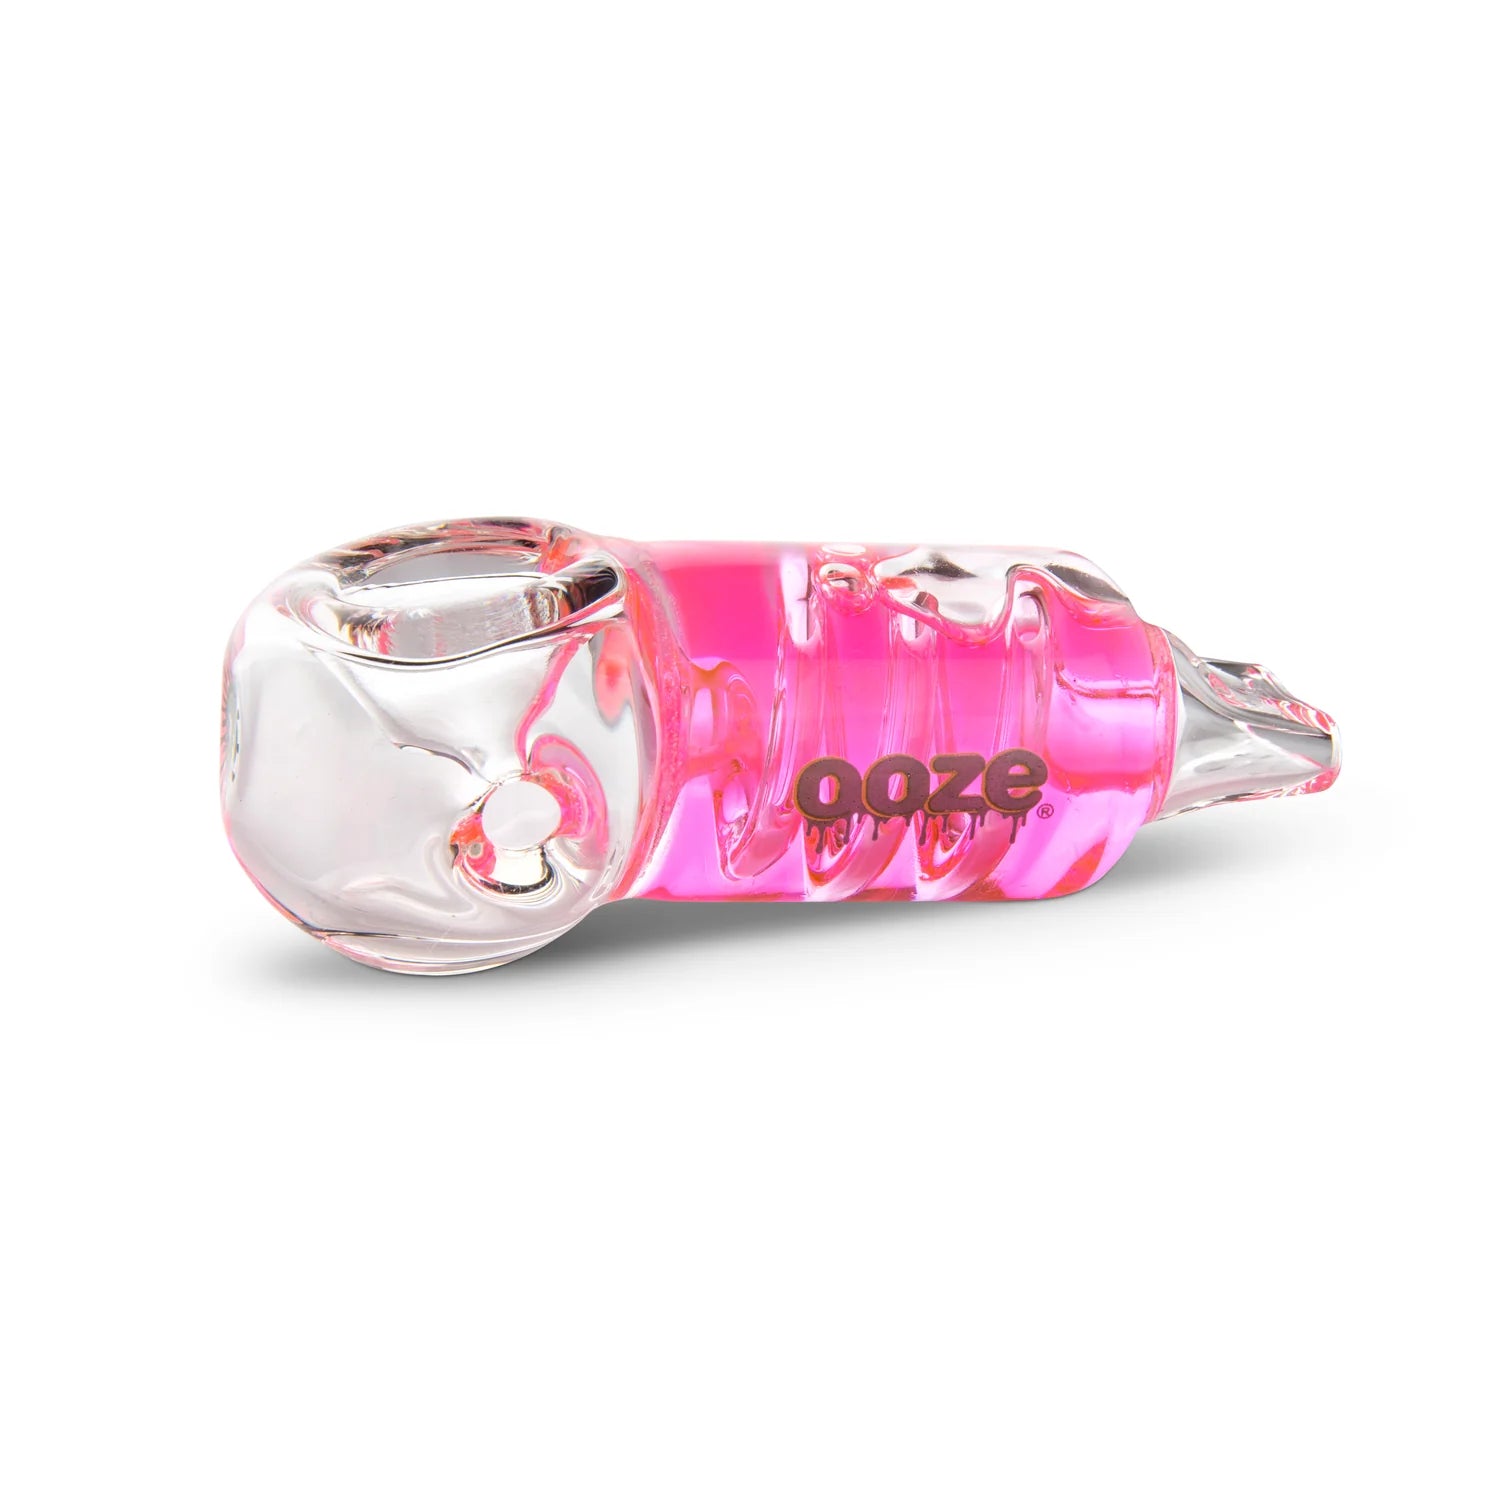 Ooze Cryo Glycerin Glass Bowl - Freezable Pink